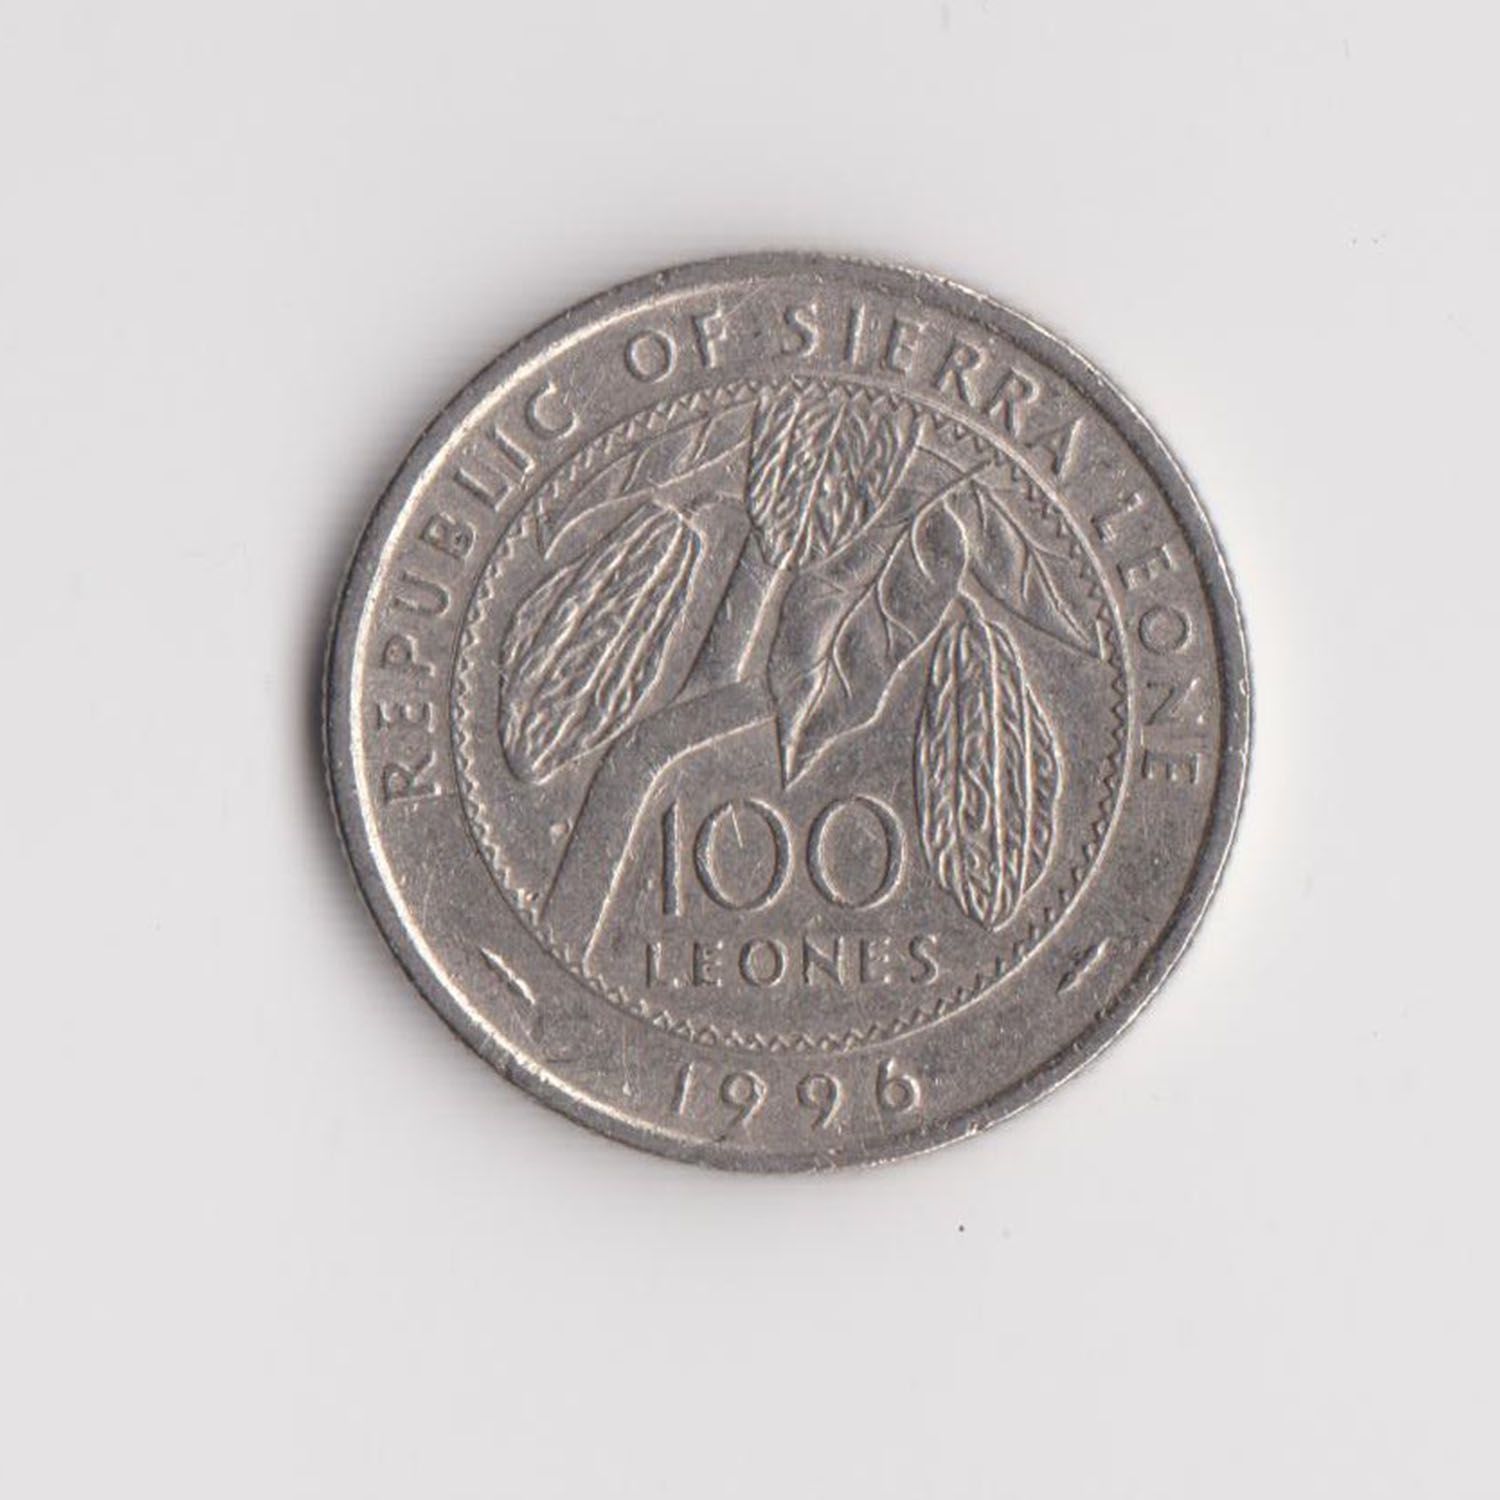 SIERRA LEONE 100 LEONES 1996 KM # 46 VF | Sierra Leone coins | COINS FOR  SALE 